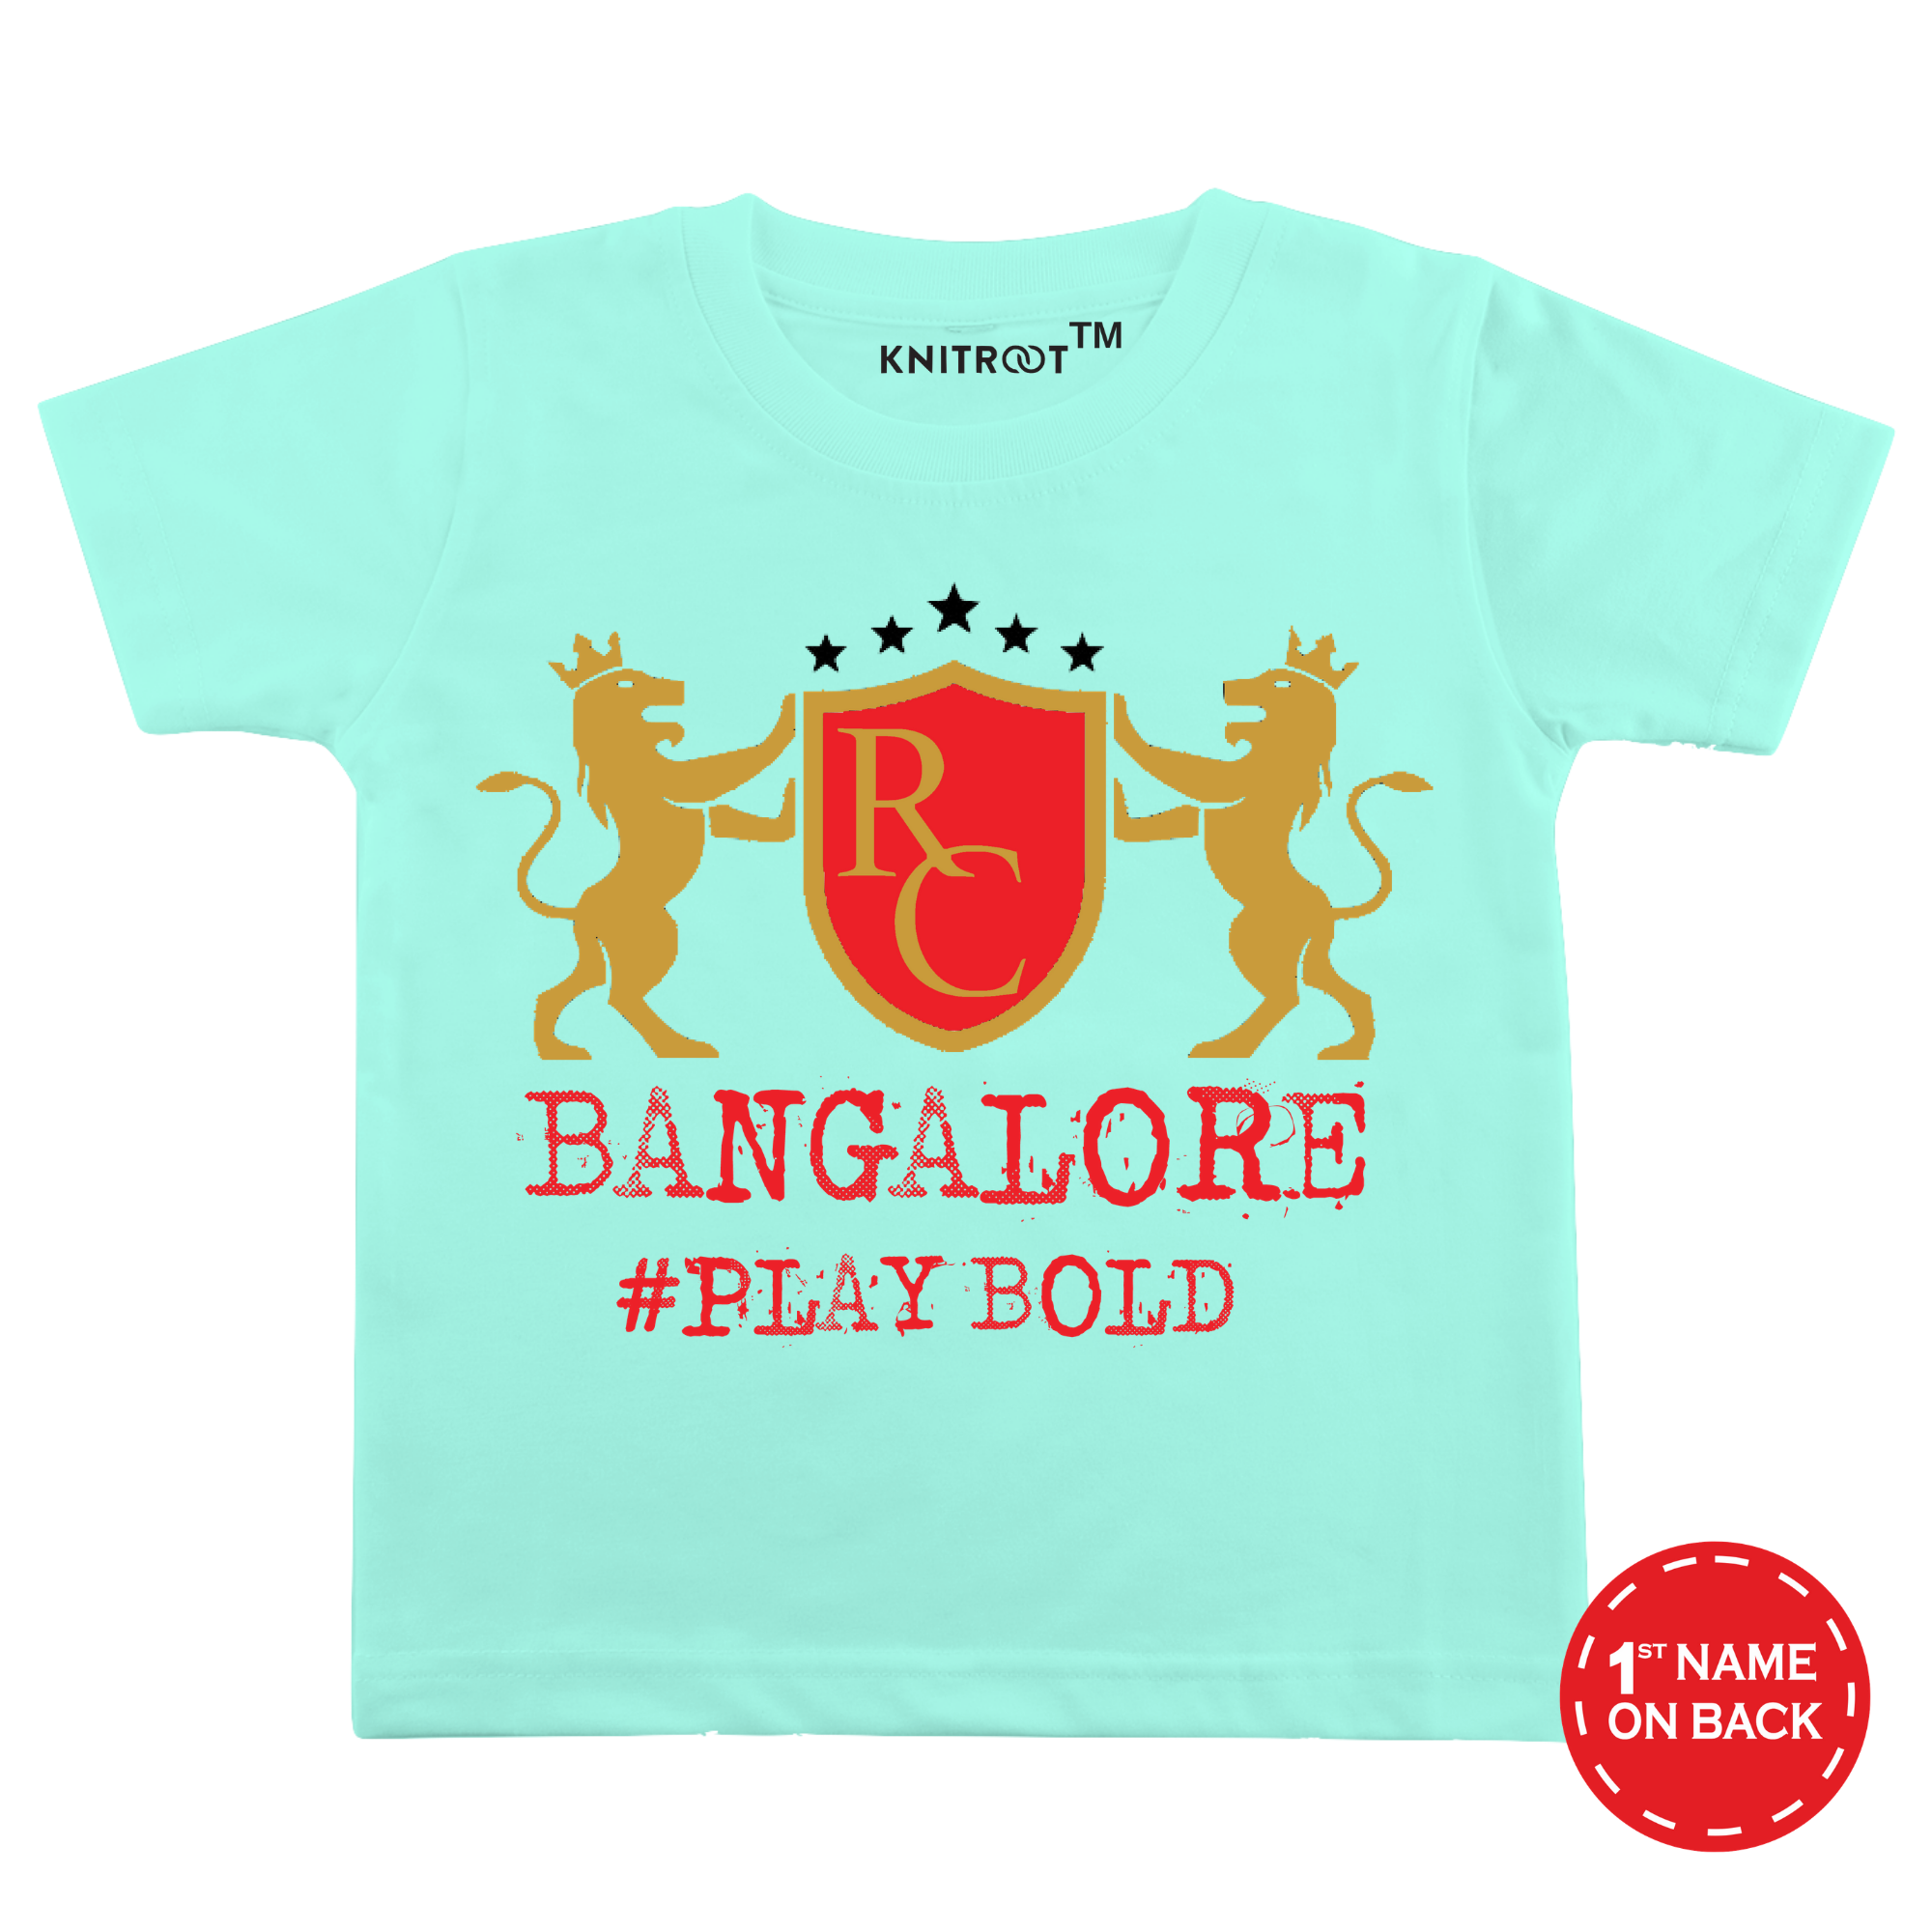 Royal Challengers Bangalore Onesie/Tee